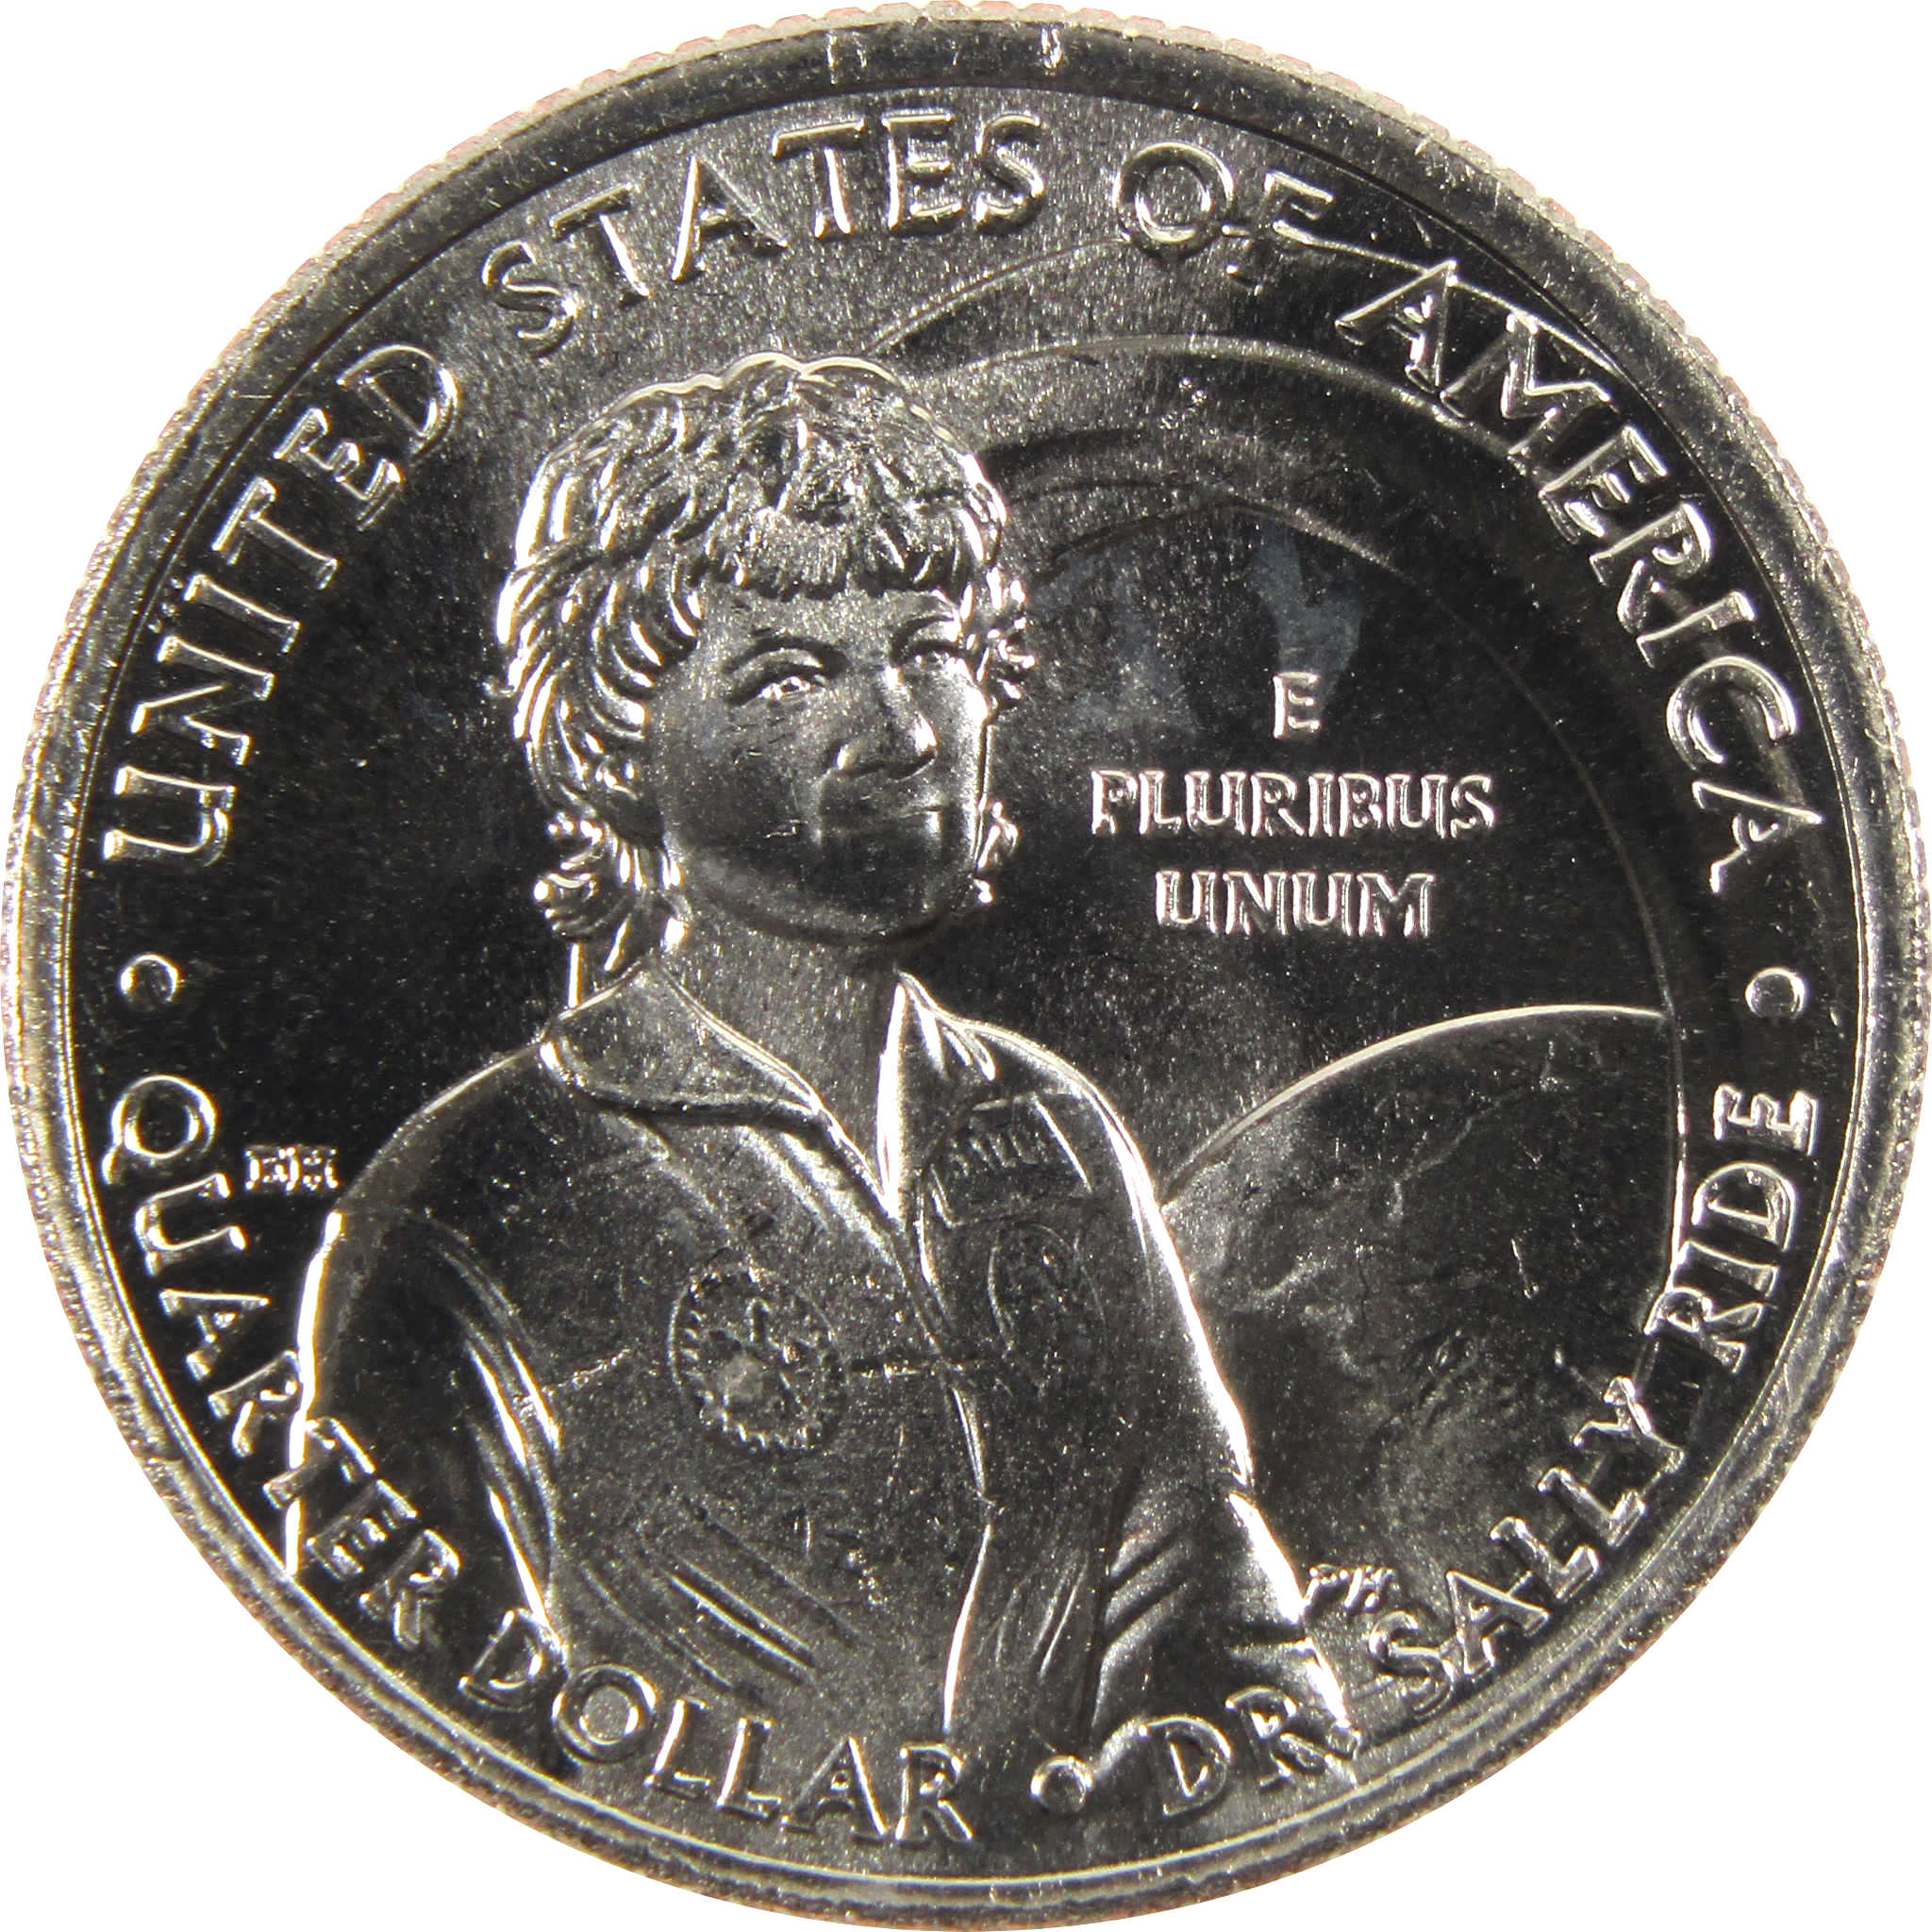 2022 D Sally Ride American Women Quarter BU Uncirculated Clad 25c Coin